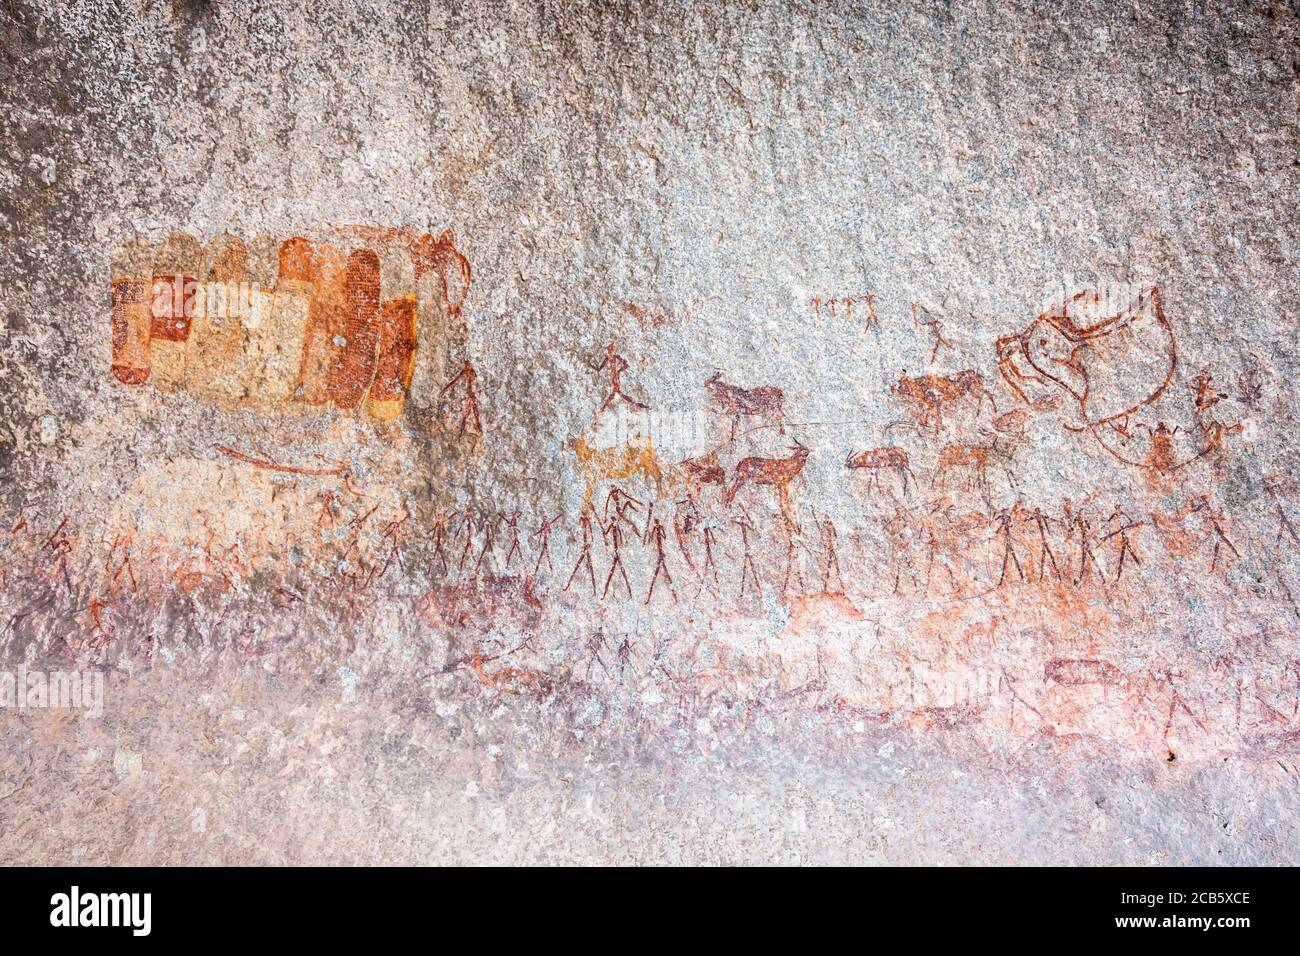 Matobo hills, 'Bambata cave' rock painting site, rock art, Matobo National Park, suburbs of Bulawayo, Matabeleland South, Zimbabwe, Africa Stock Photo